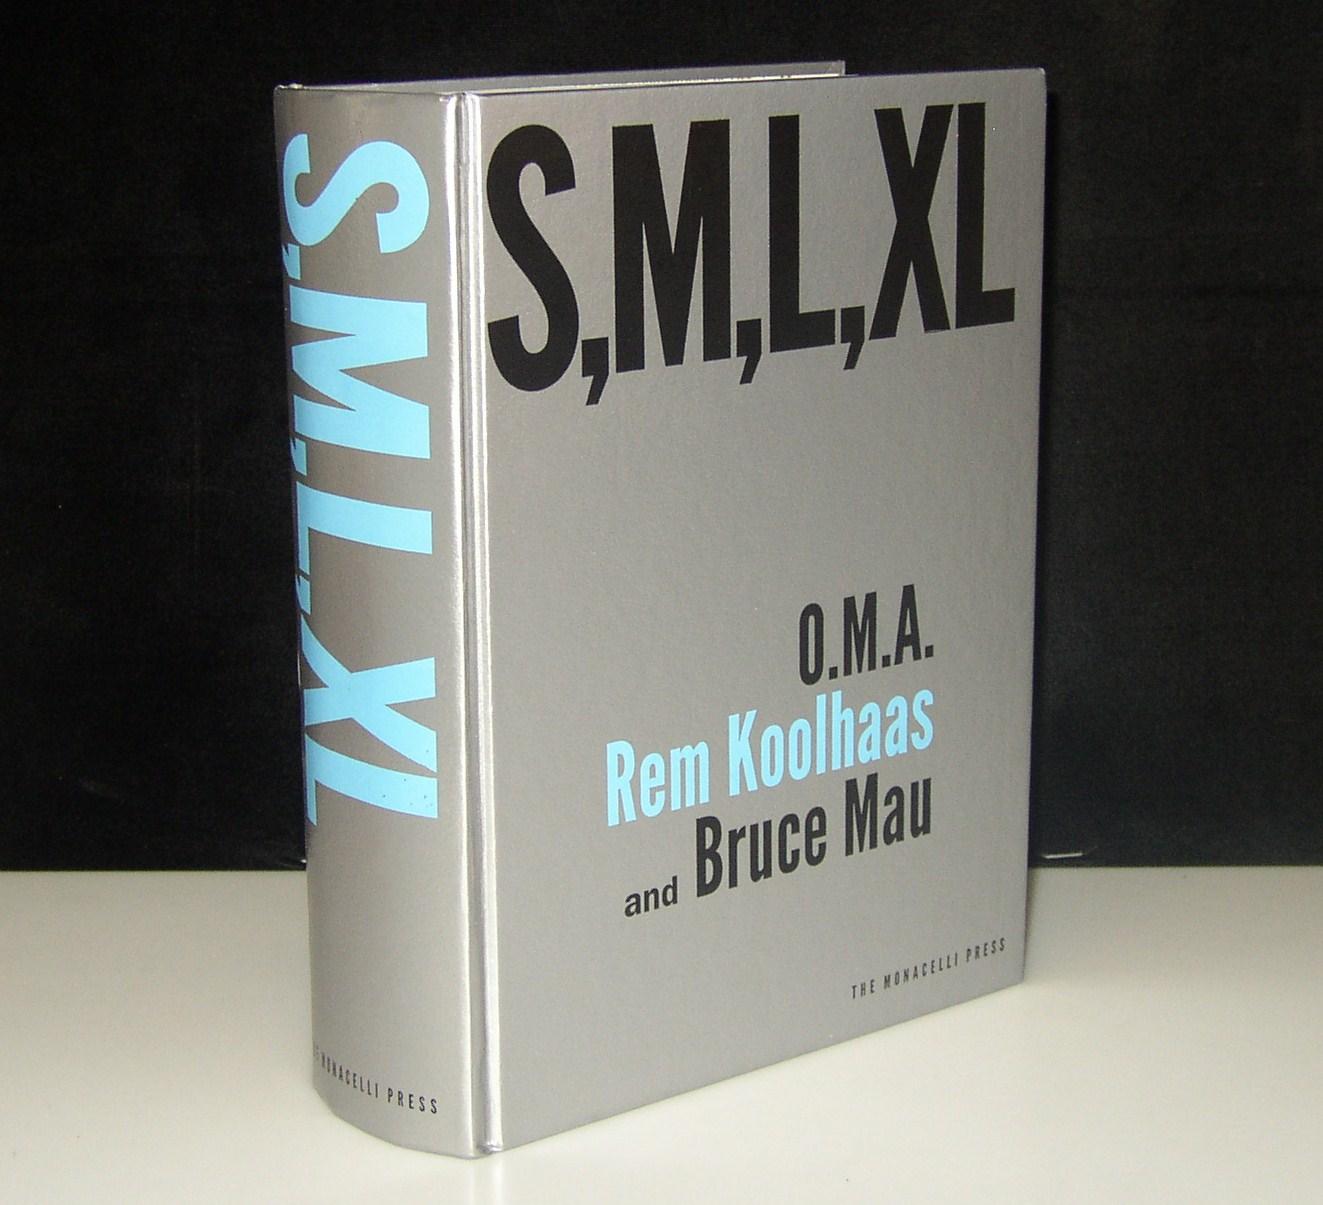 S, M, L, XL: Small, Medium, Large, Extra 